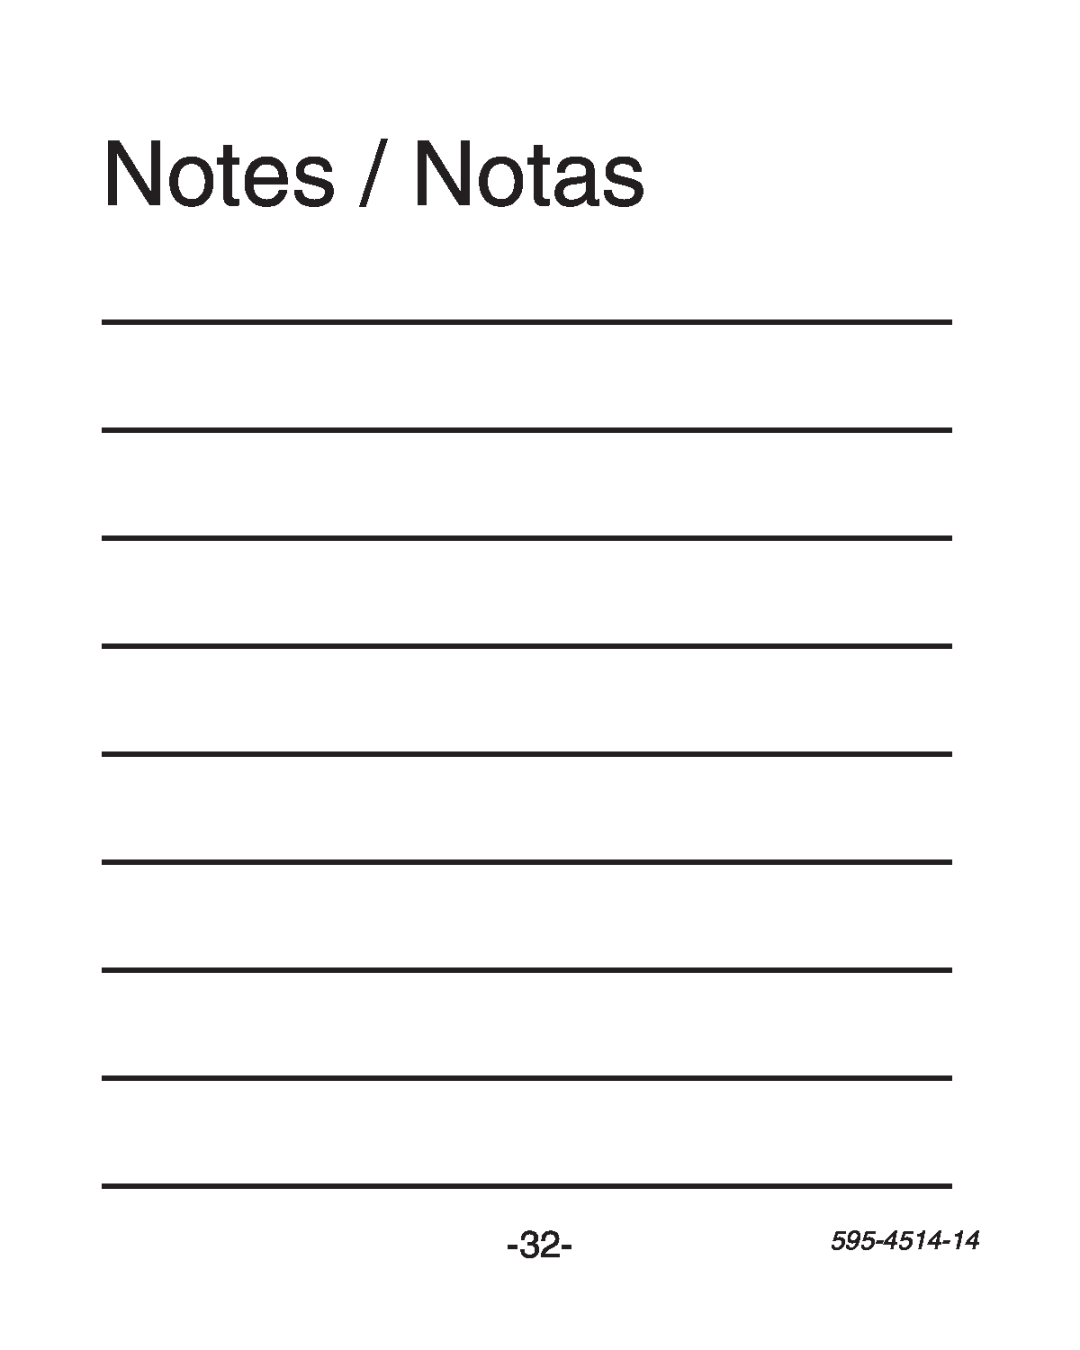 Heath Zenith SL-6107 manual Notes / Notas, 32-595-4514-14 